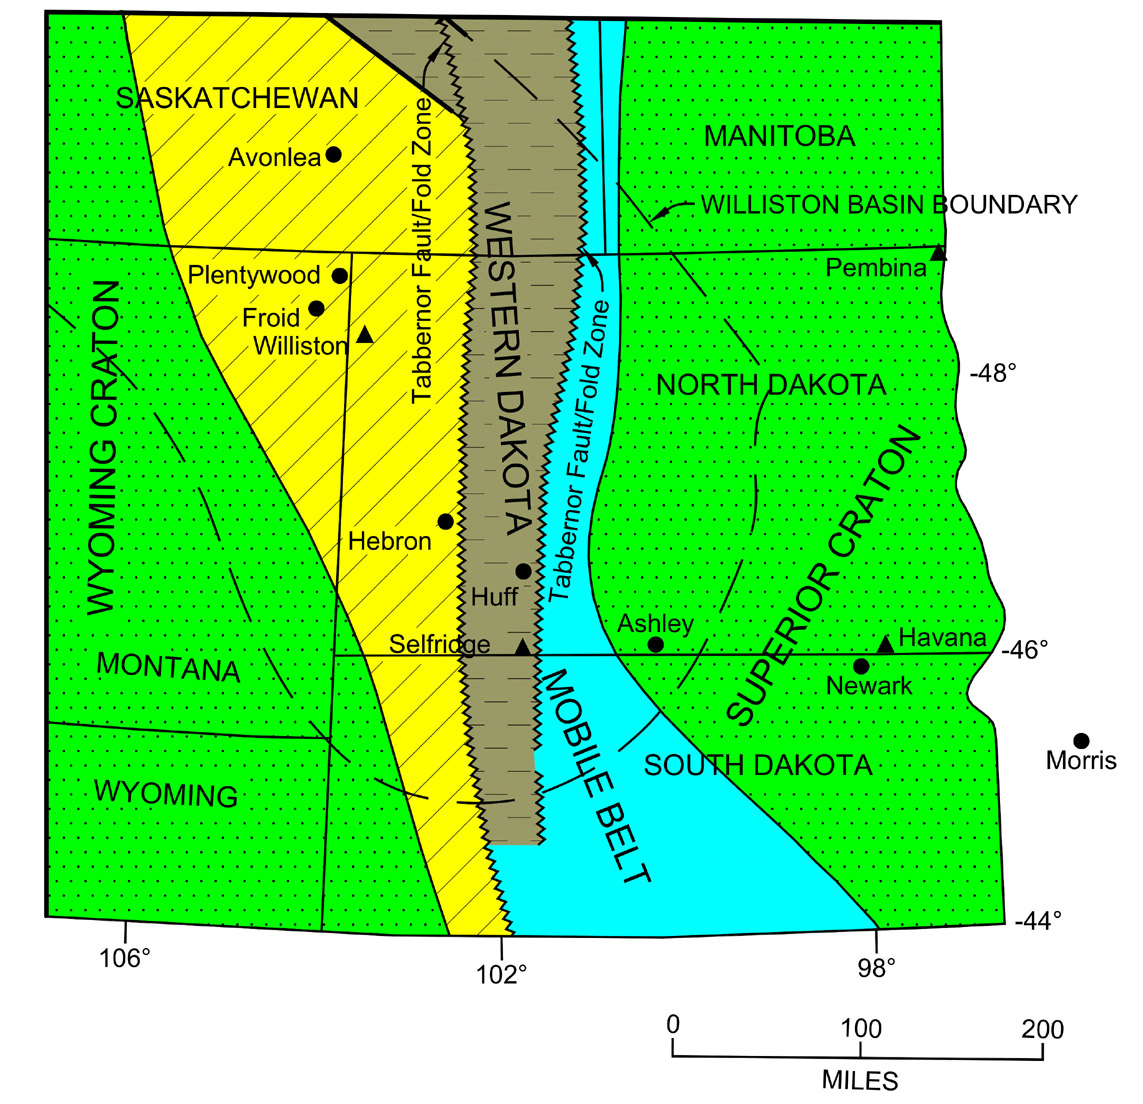 Main basement geologic structures in North Dakota